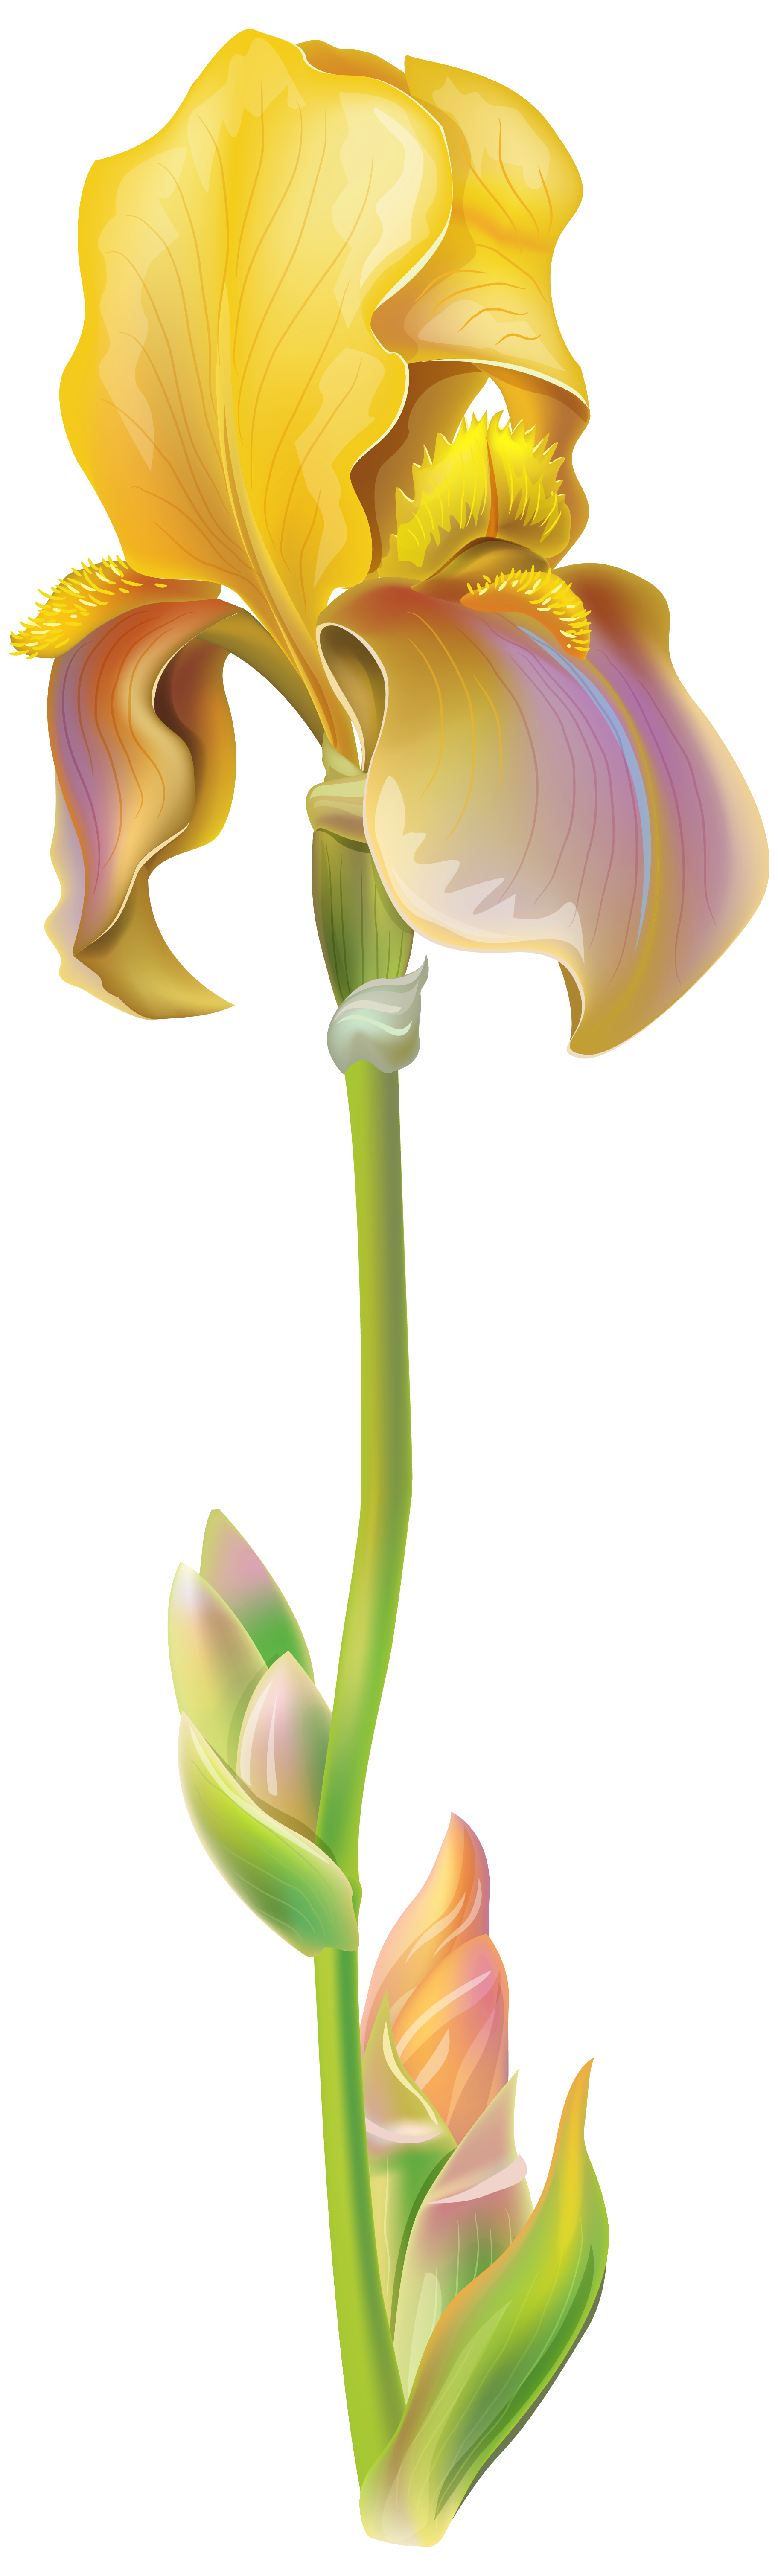 free clip art iris flower - photo #13